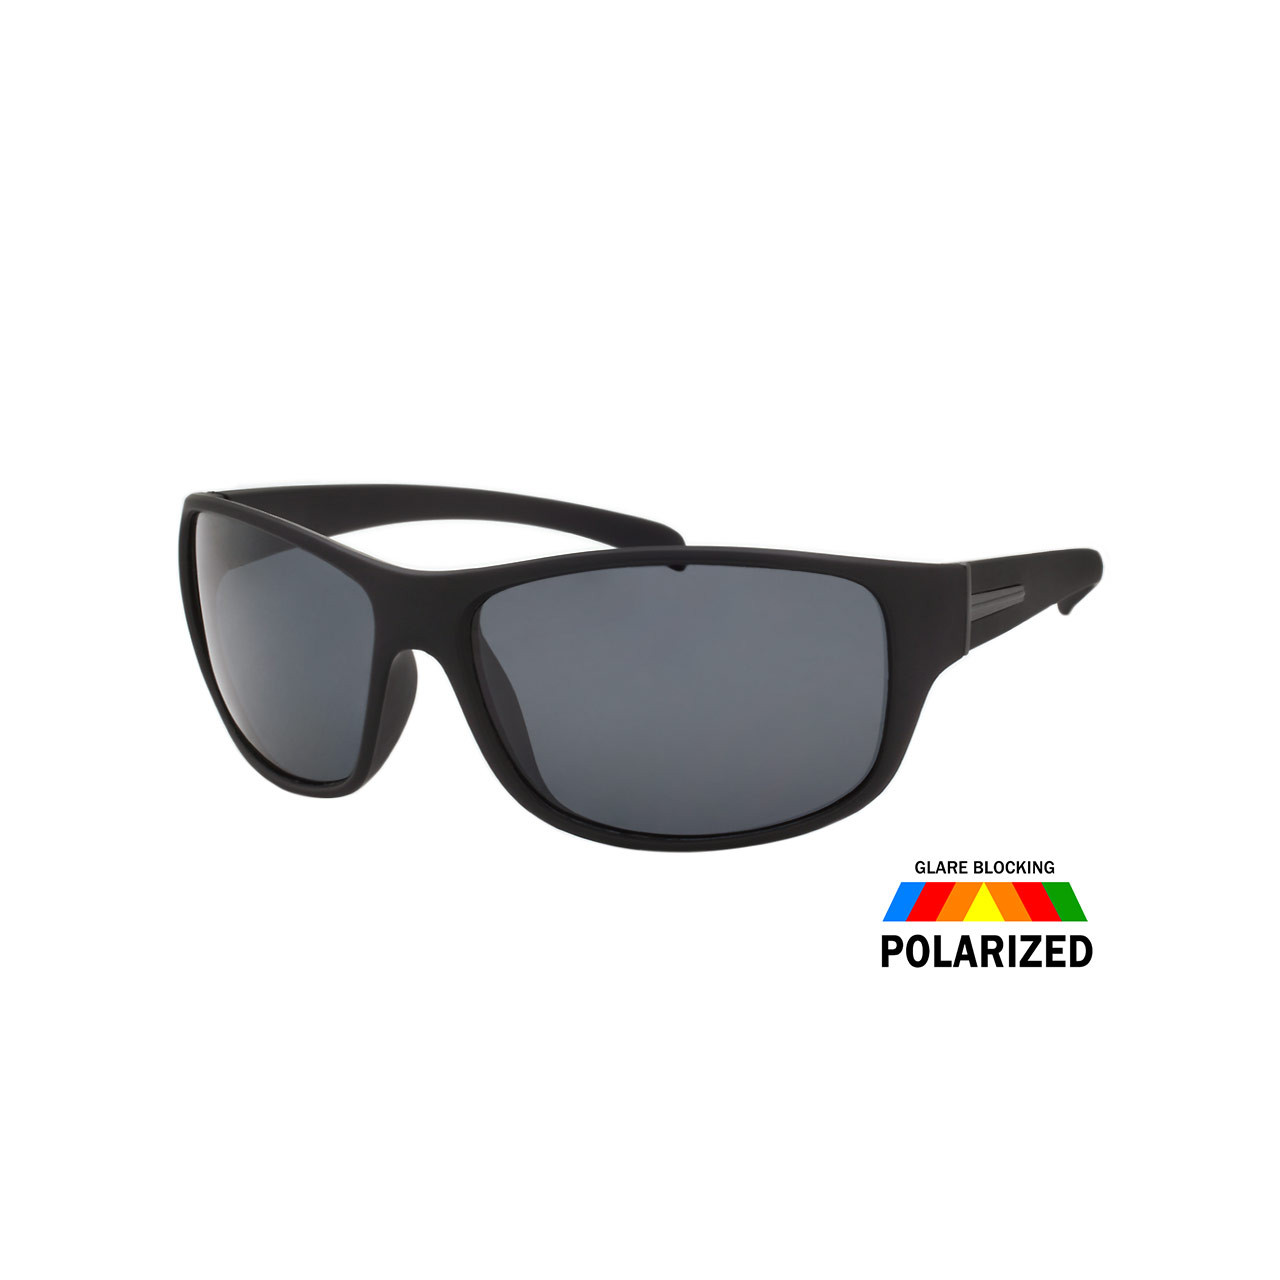 TPOLMST02  SPORT ASSTD. 12 PCS - Shark Eyes, Inc. - Wholesale Sunglasses,  Reading Glasses, & Displays